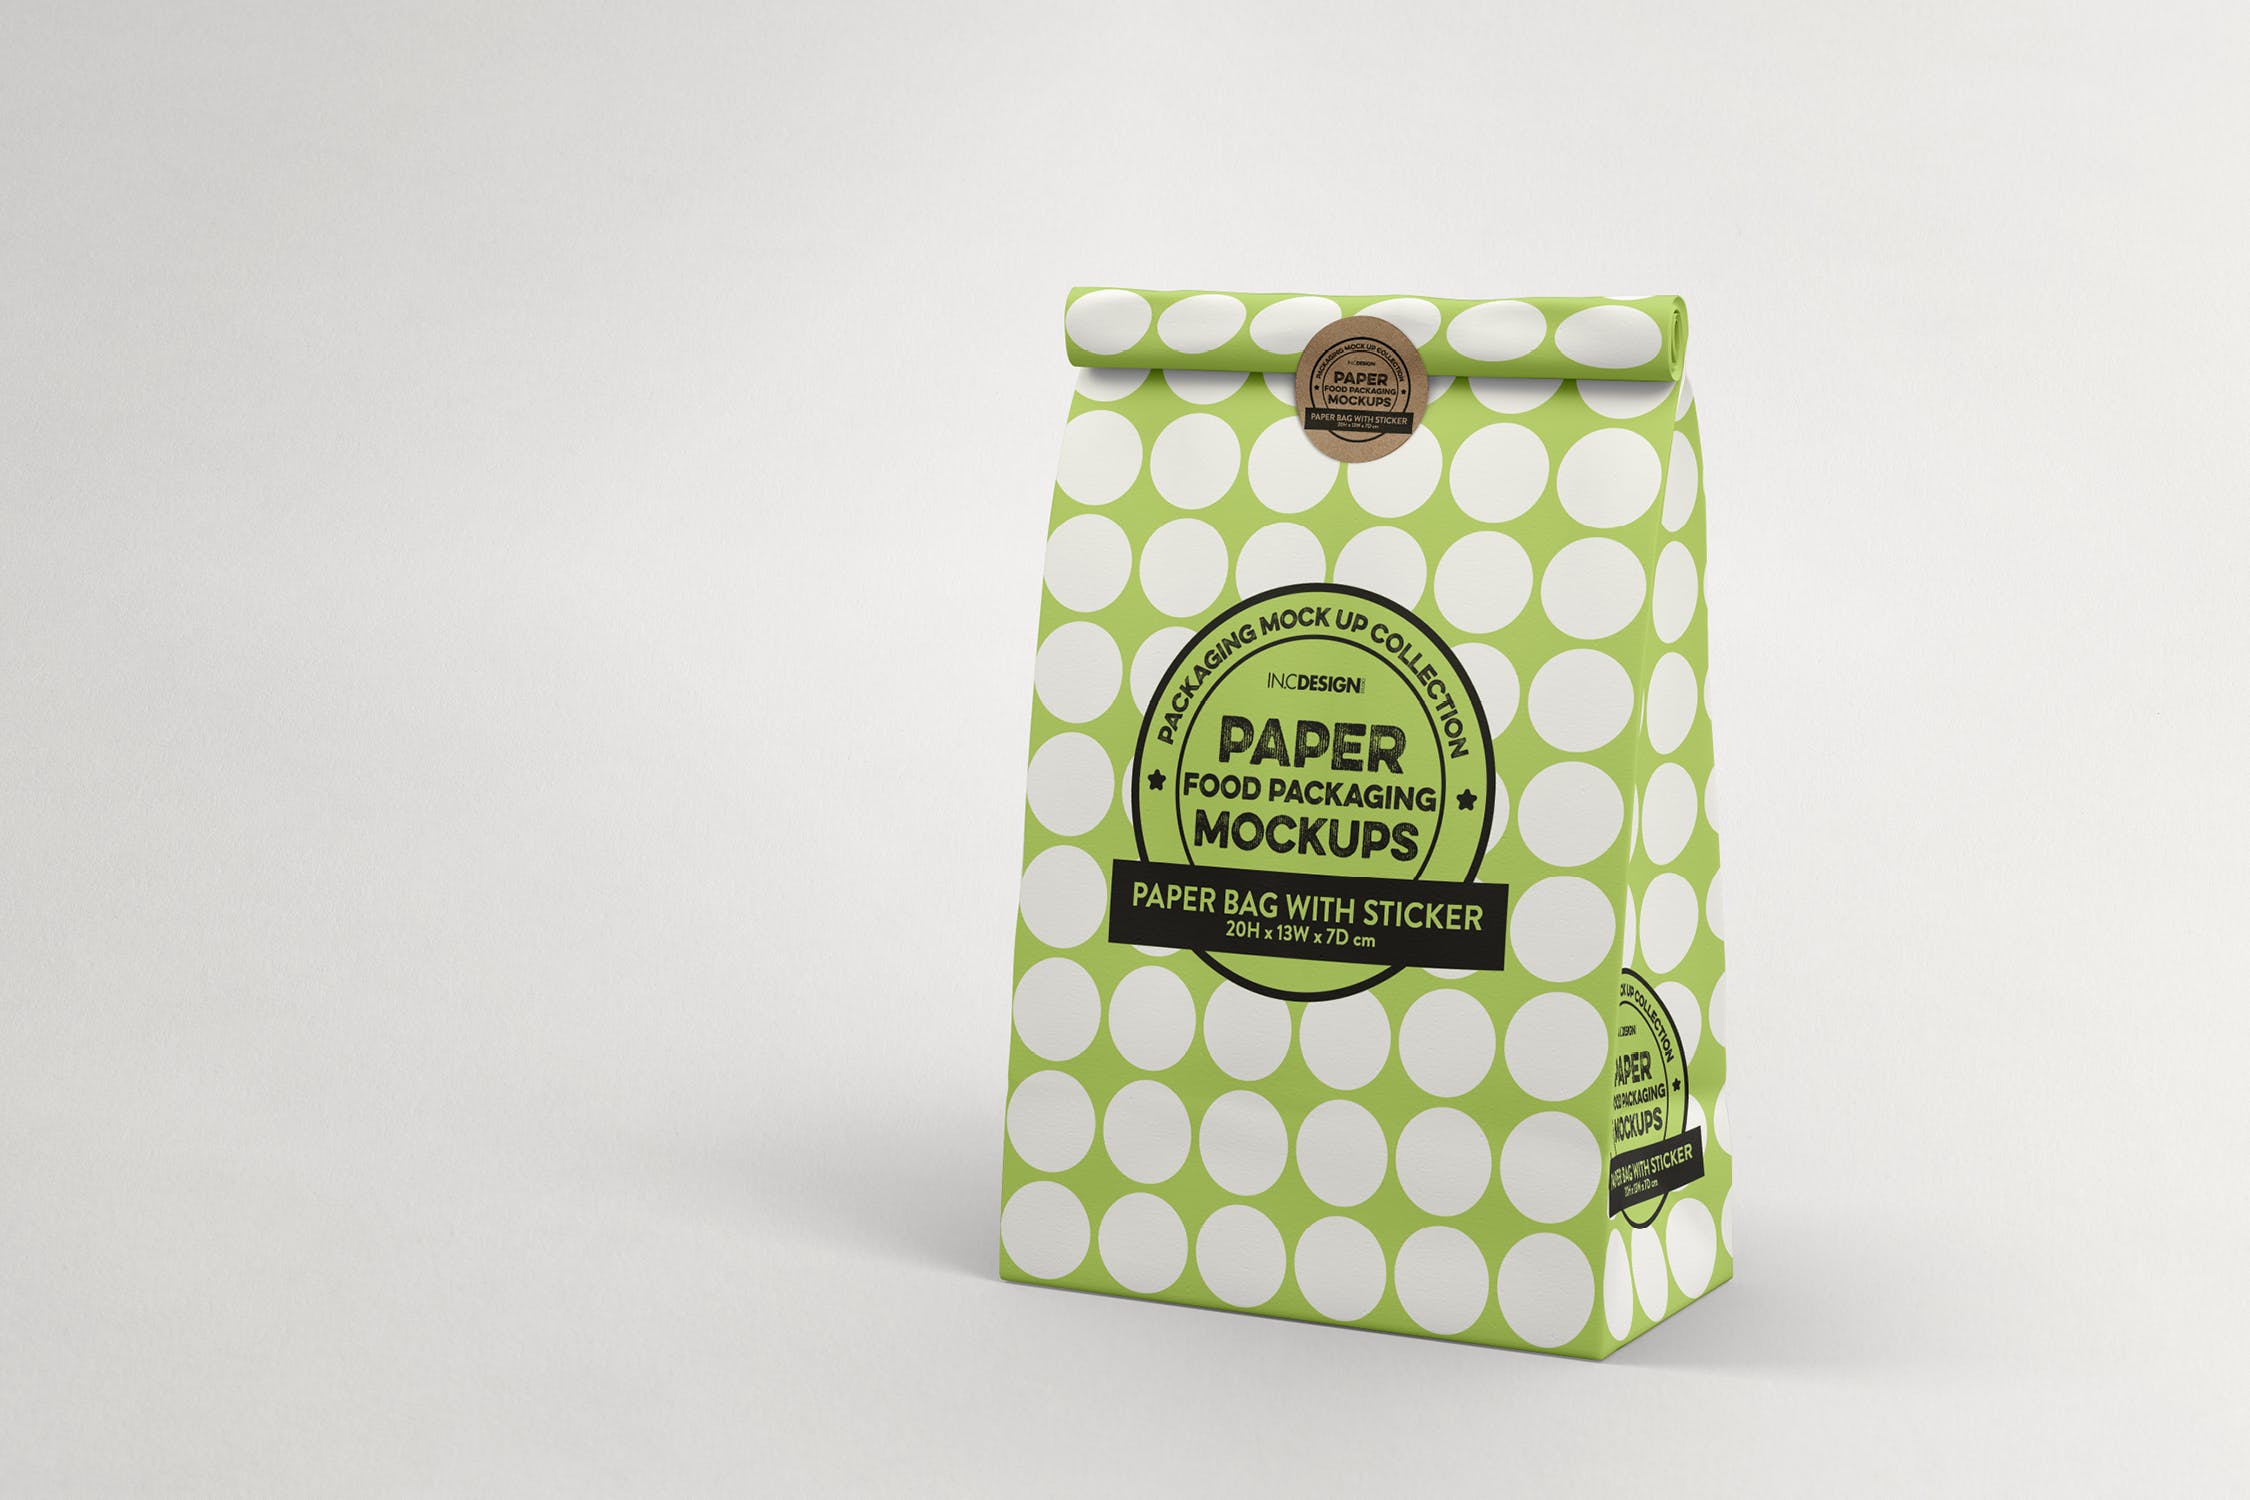 贴纸密封包装纸袋设计效果图16设计网精选 Paper Bag with sticker Seal Packaging Mockup插图(2)